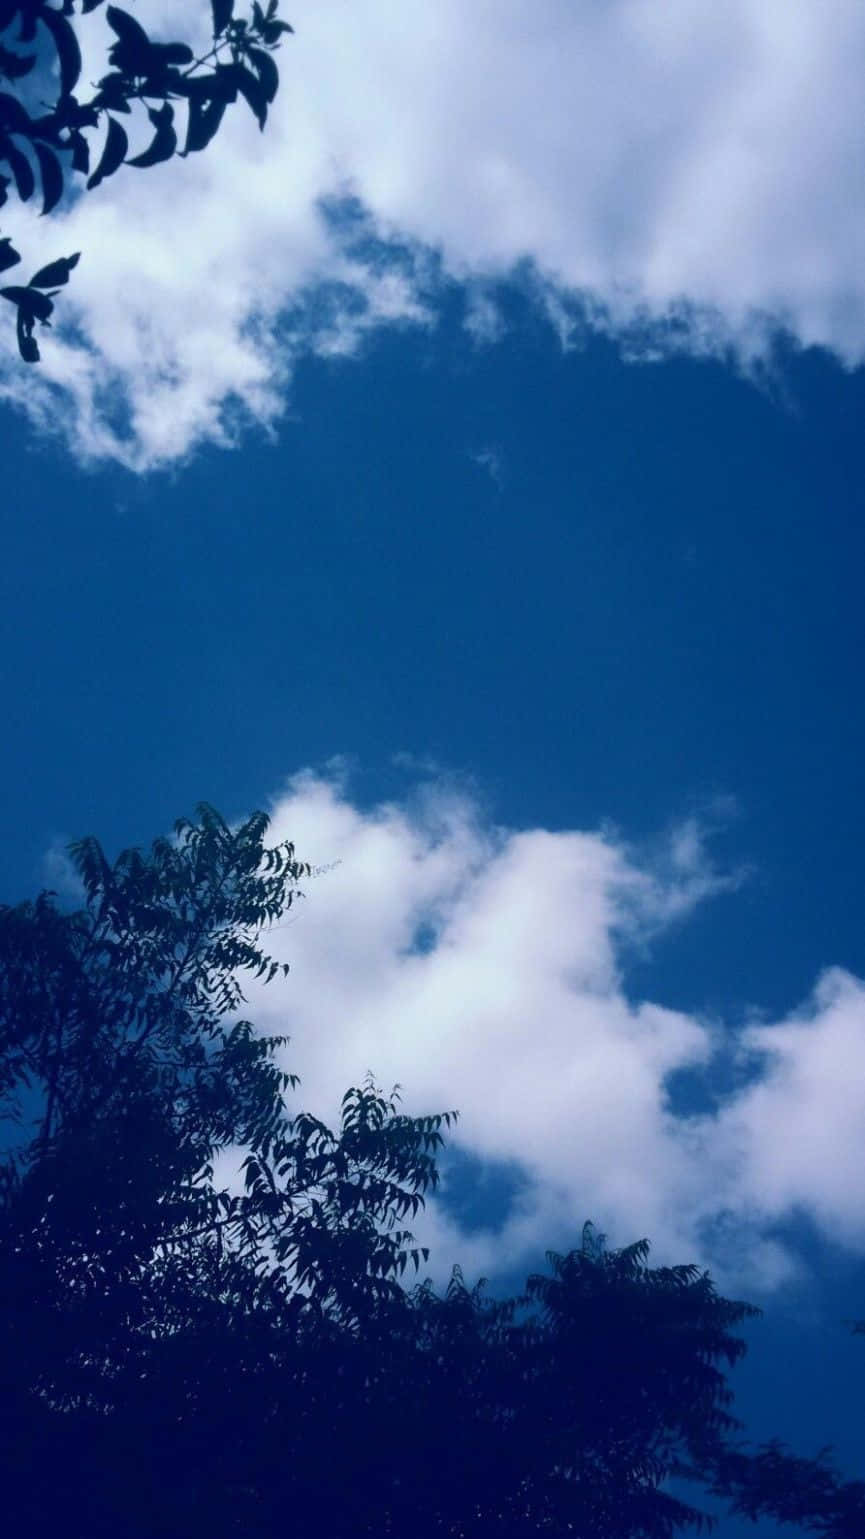 "Cool, blue sky with wispy, dreamy clouds."